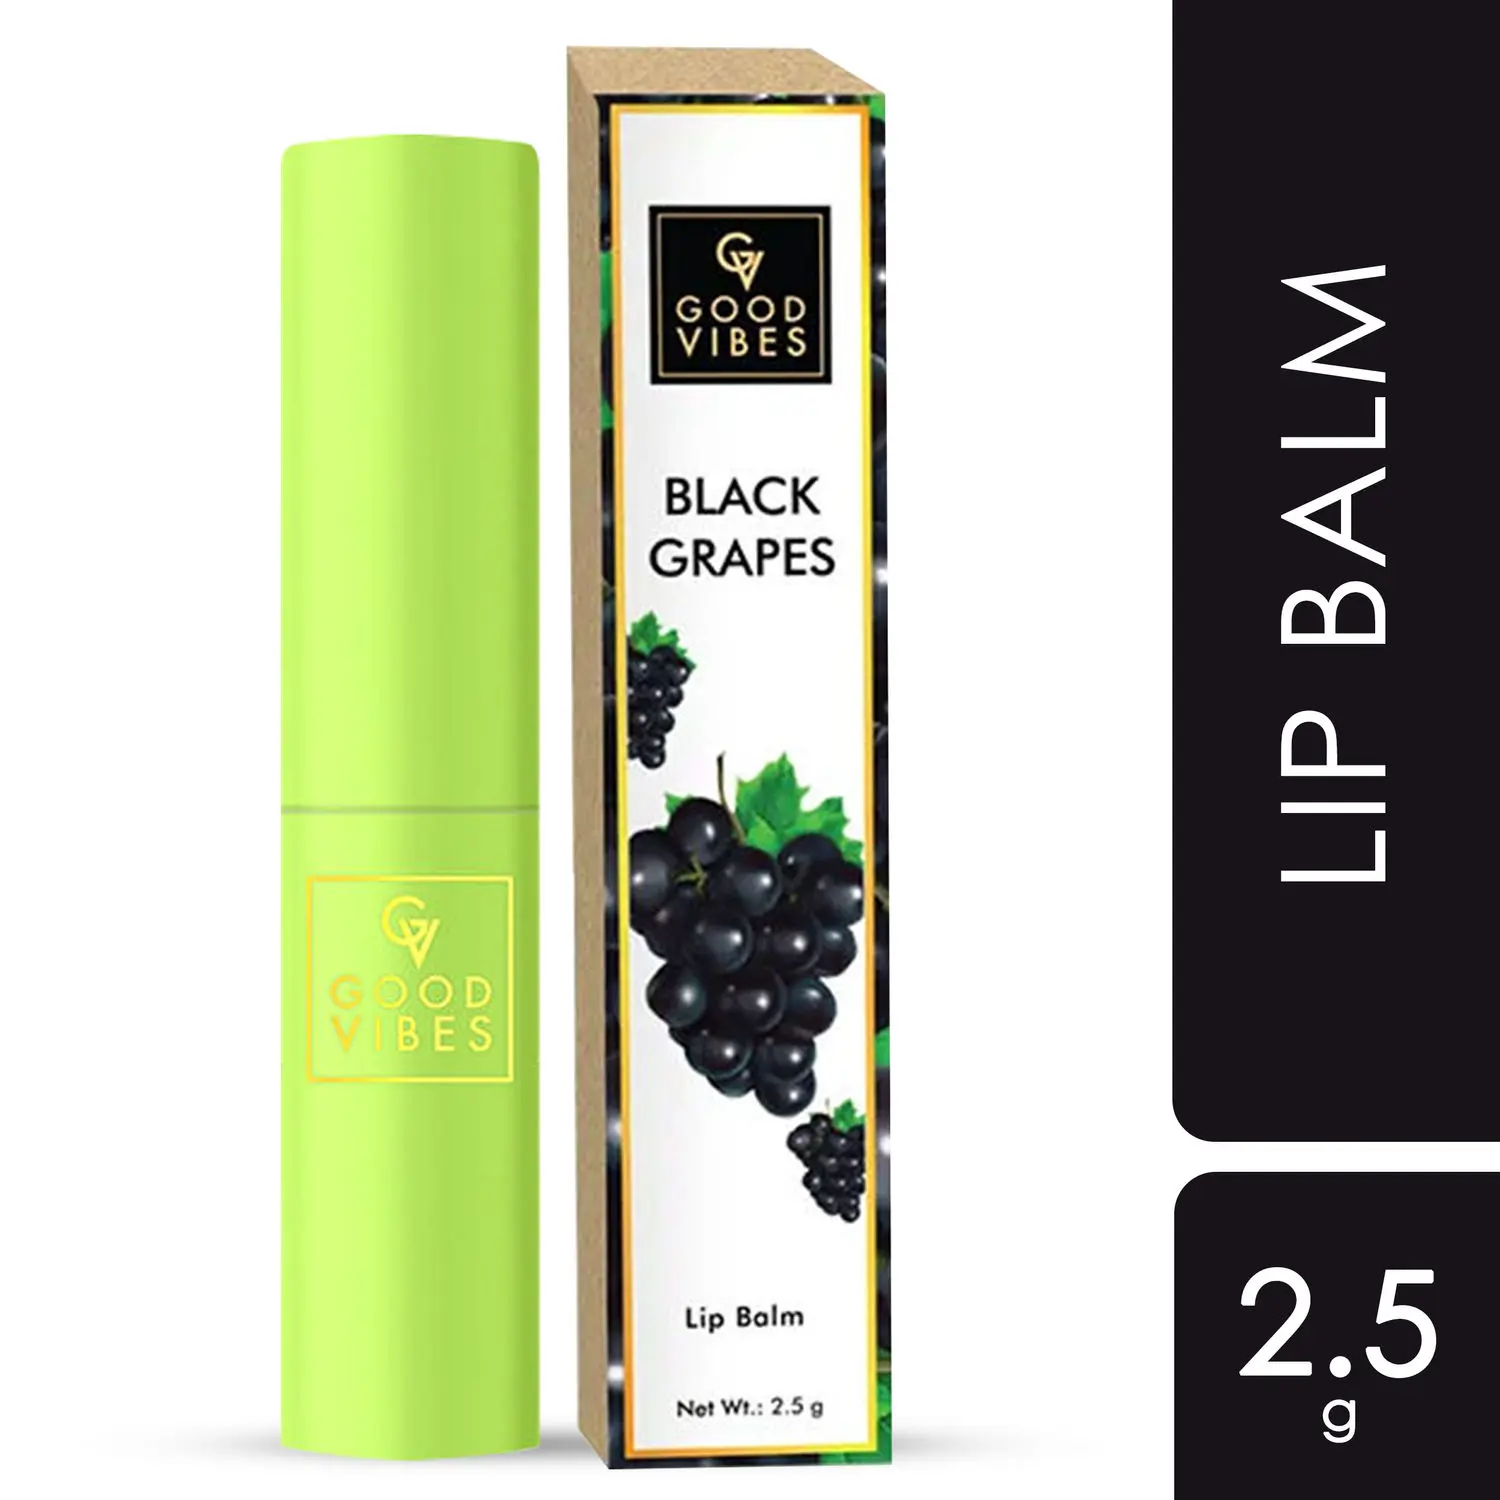 Good Vibes Lip Balm, Black Grapes (2.5 gm)